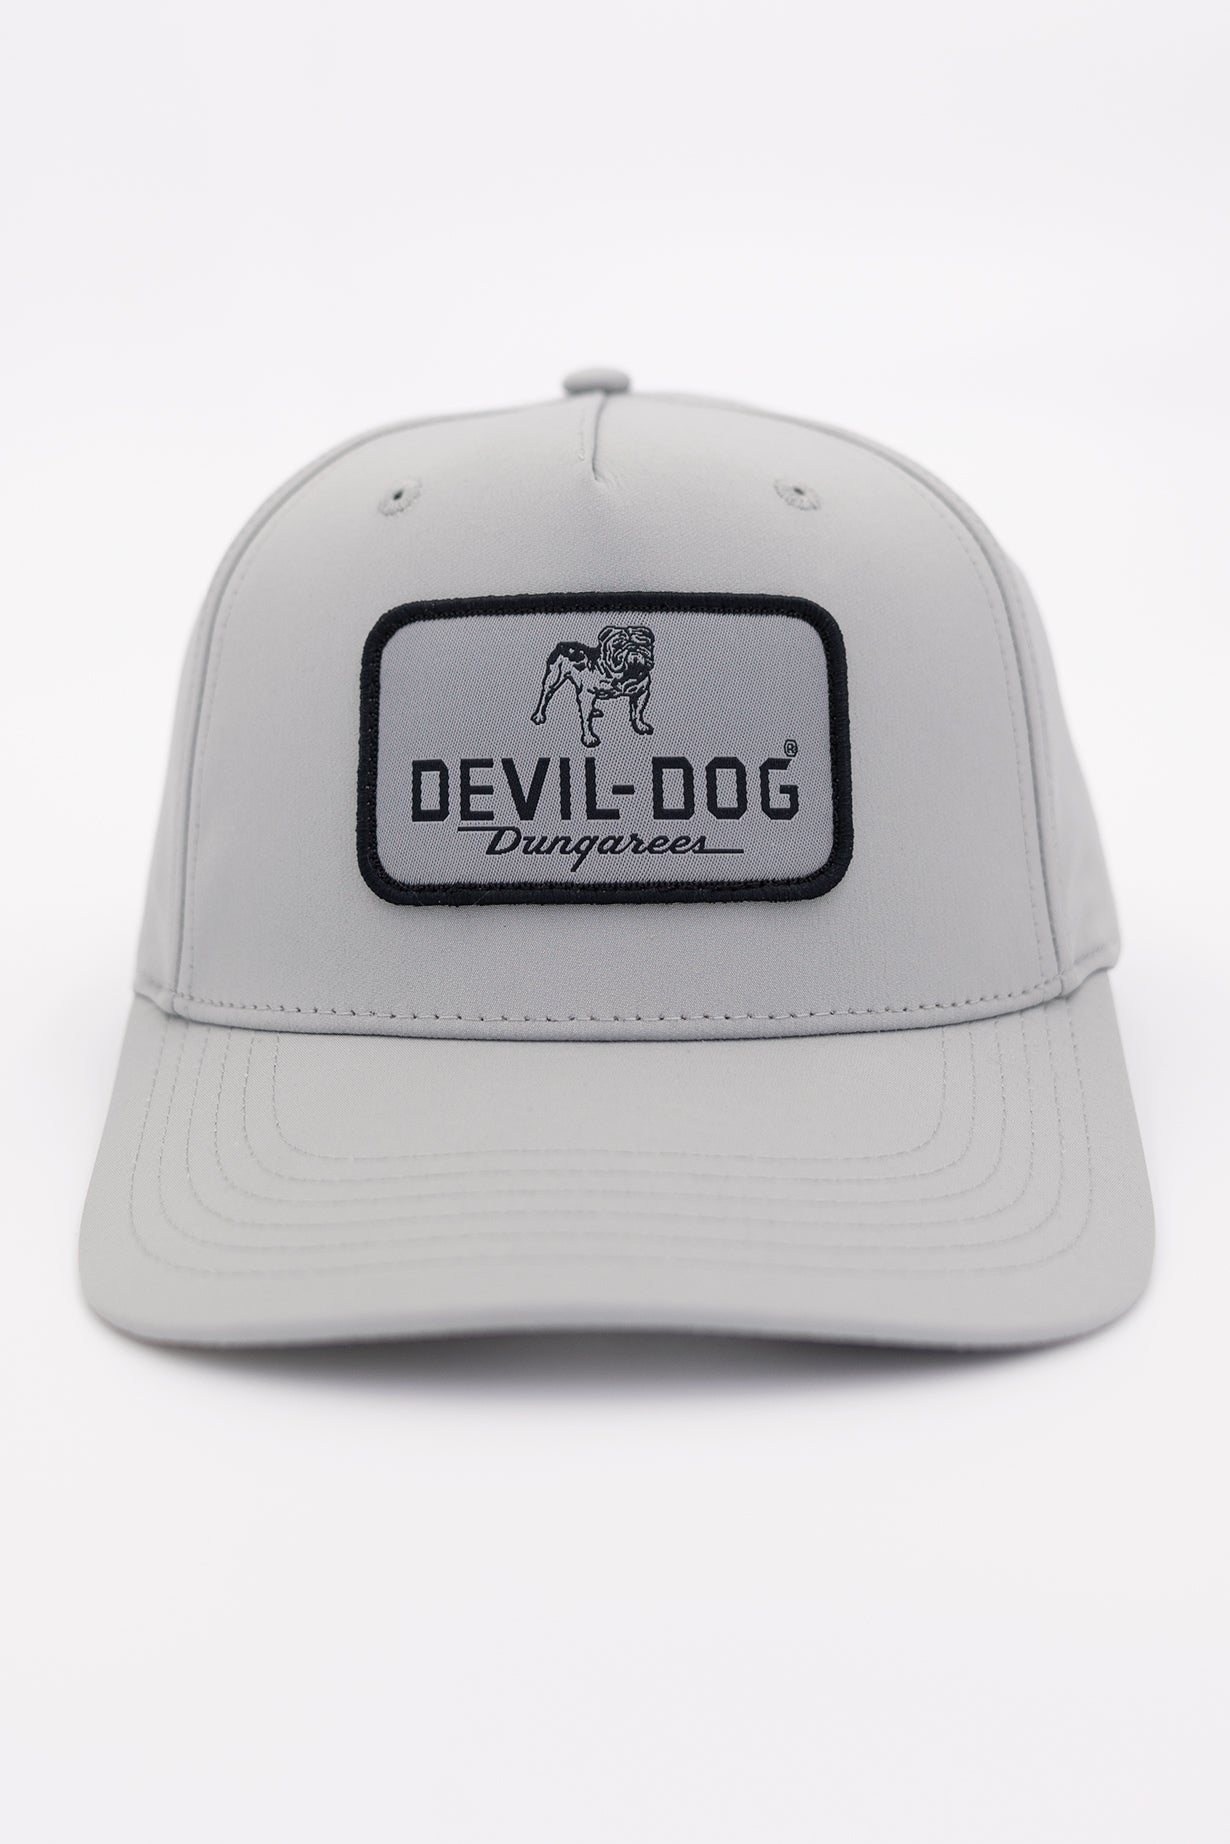 Devil Dog Hats